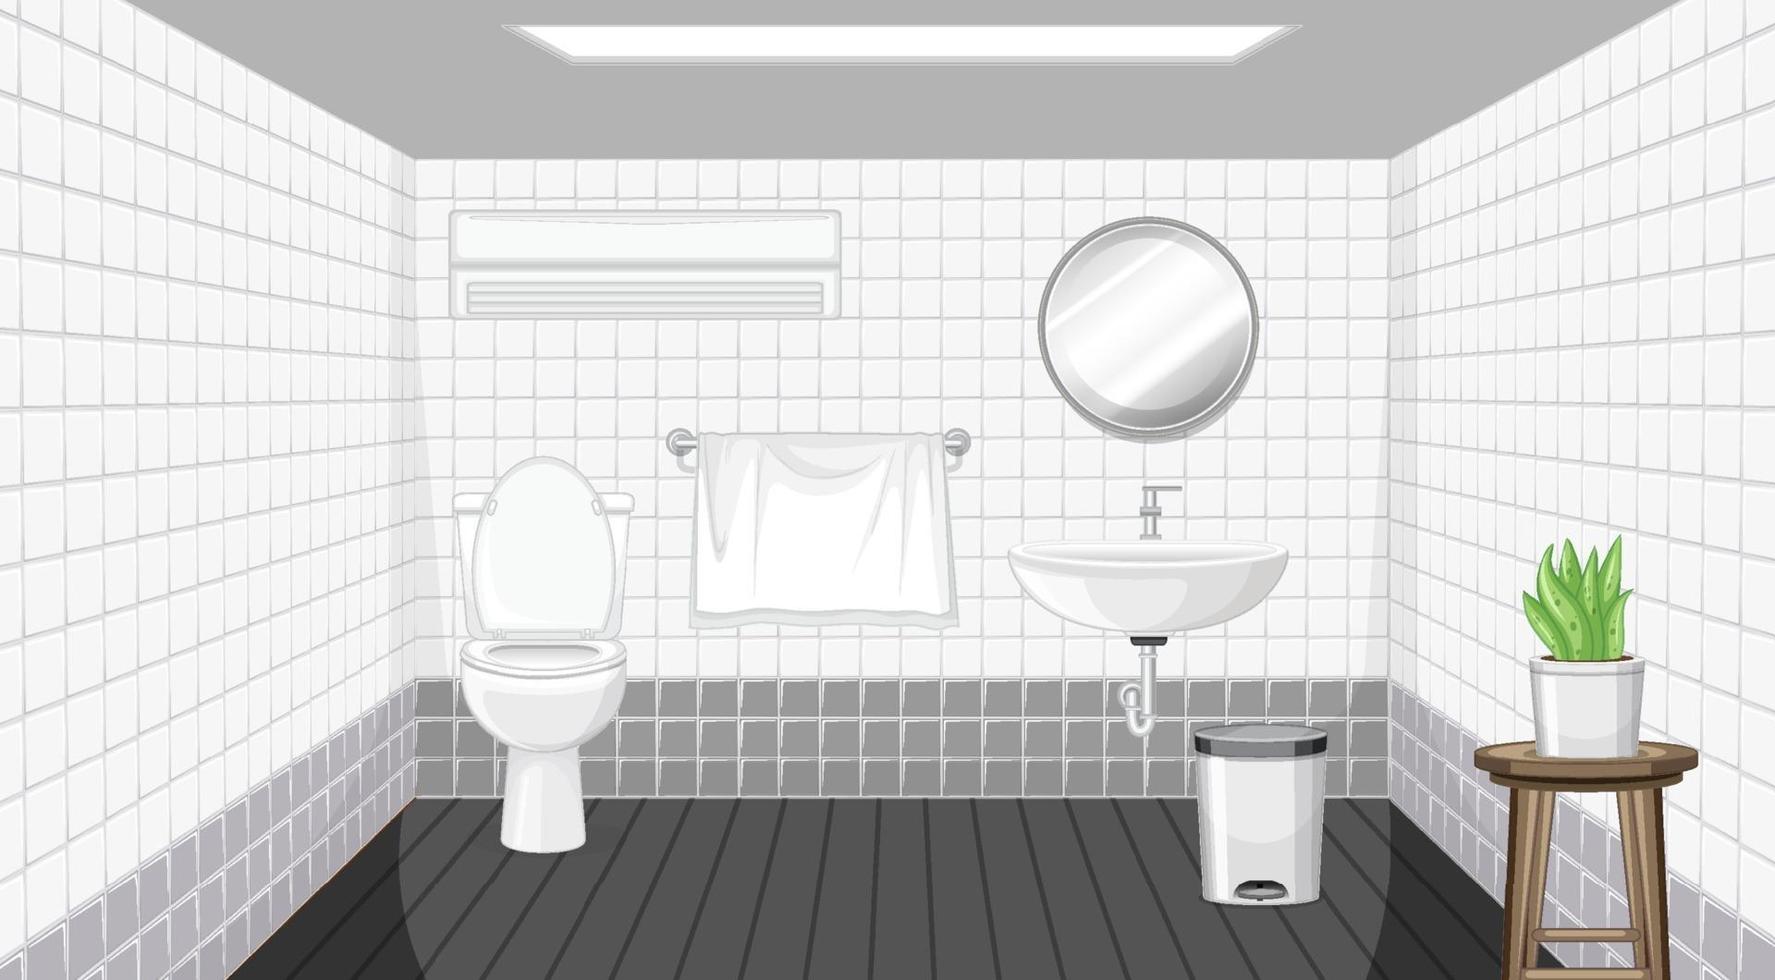 Bathroom interior design with furniture vector